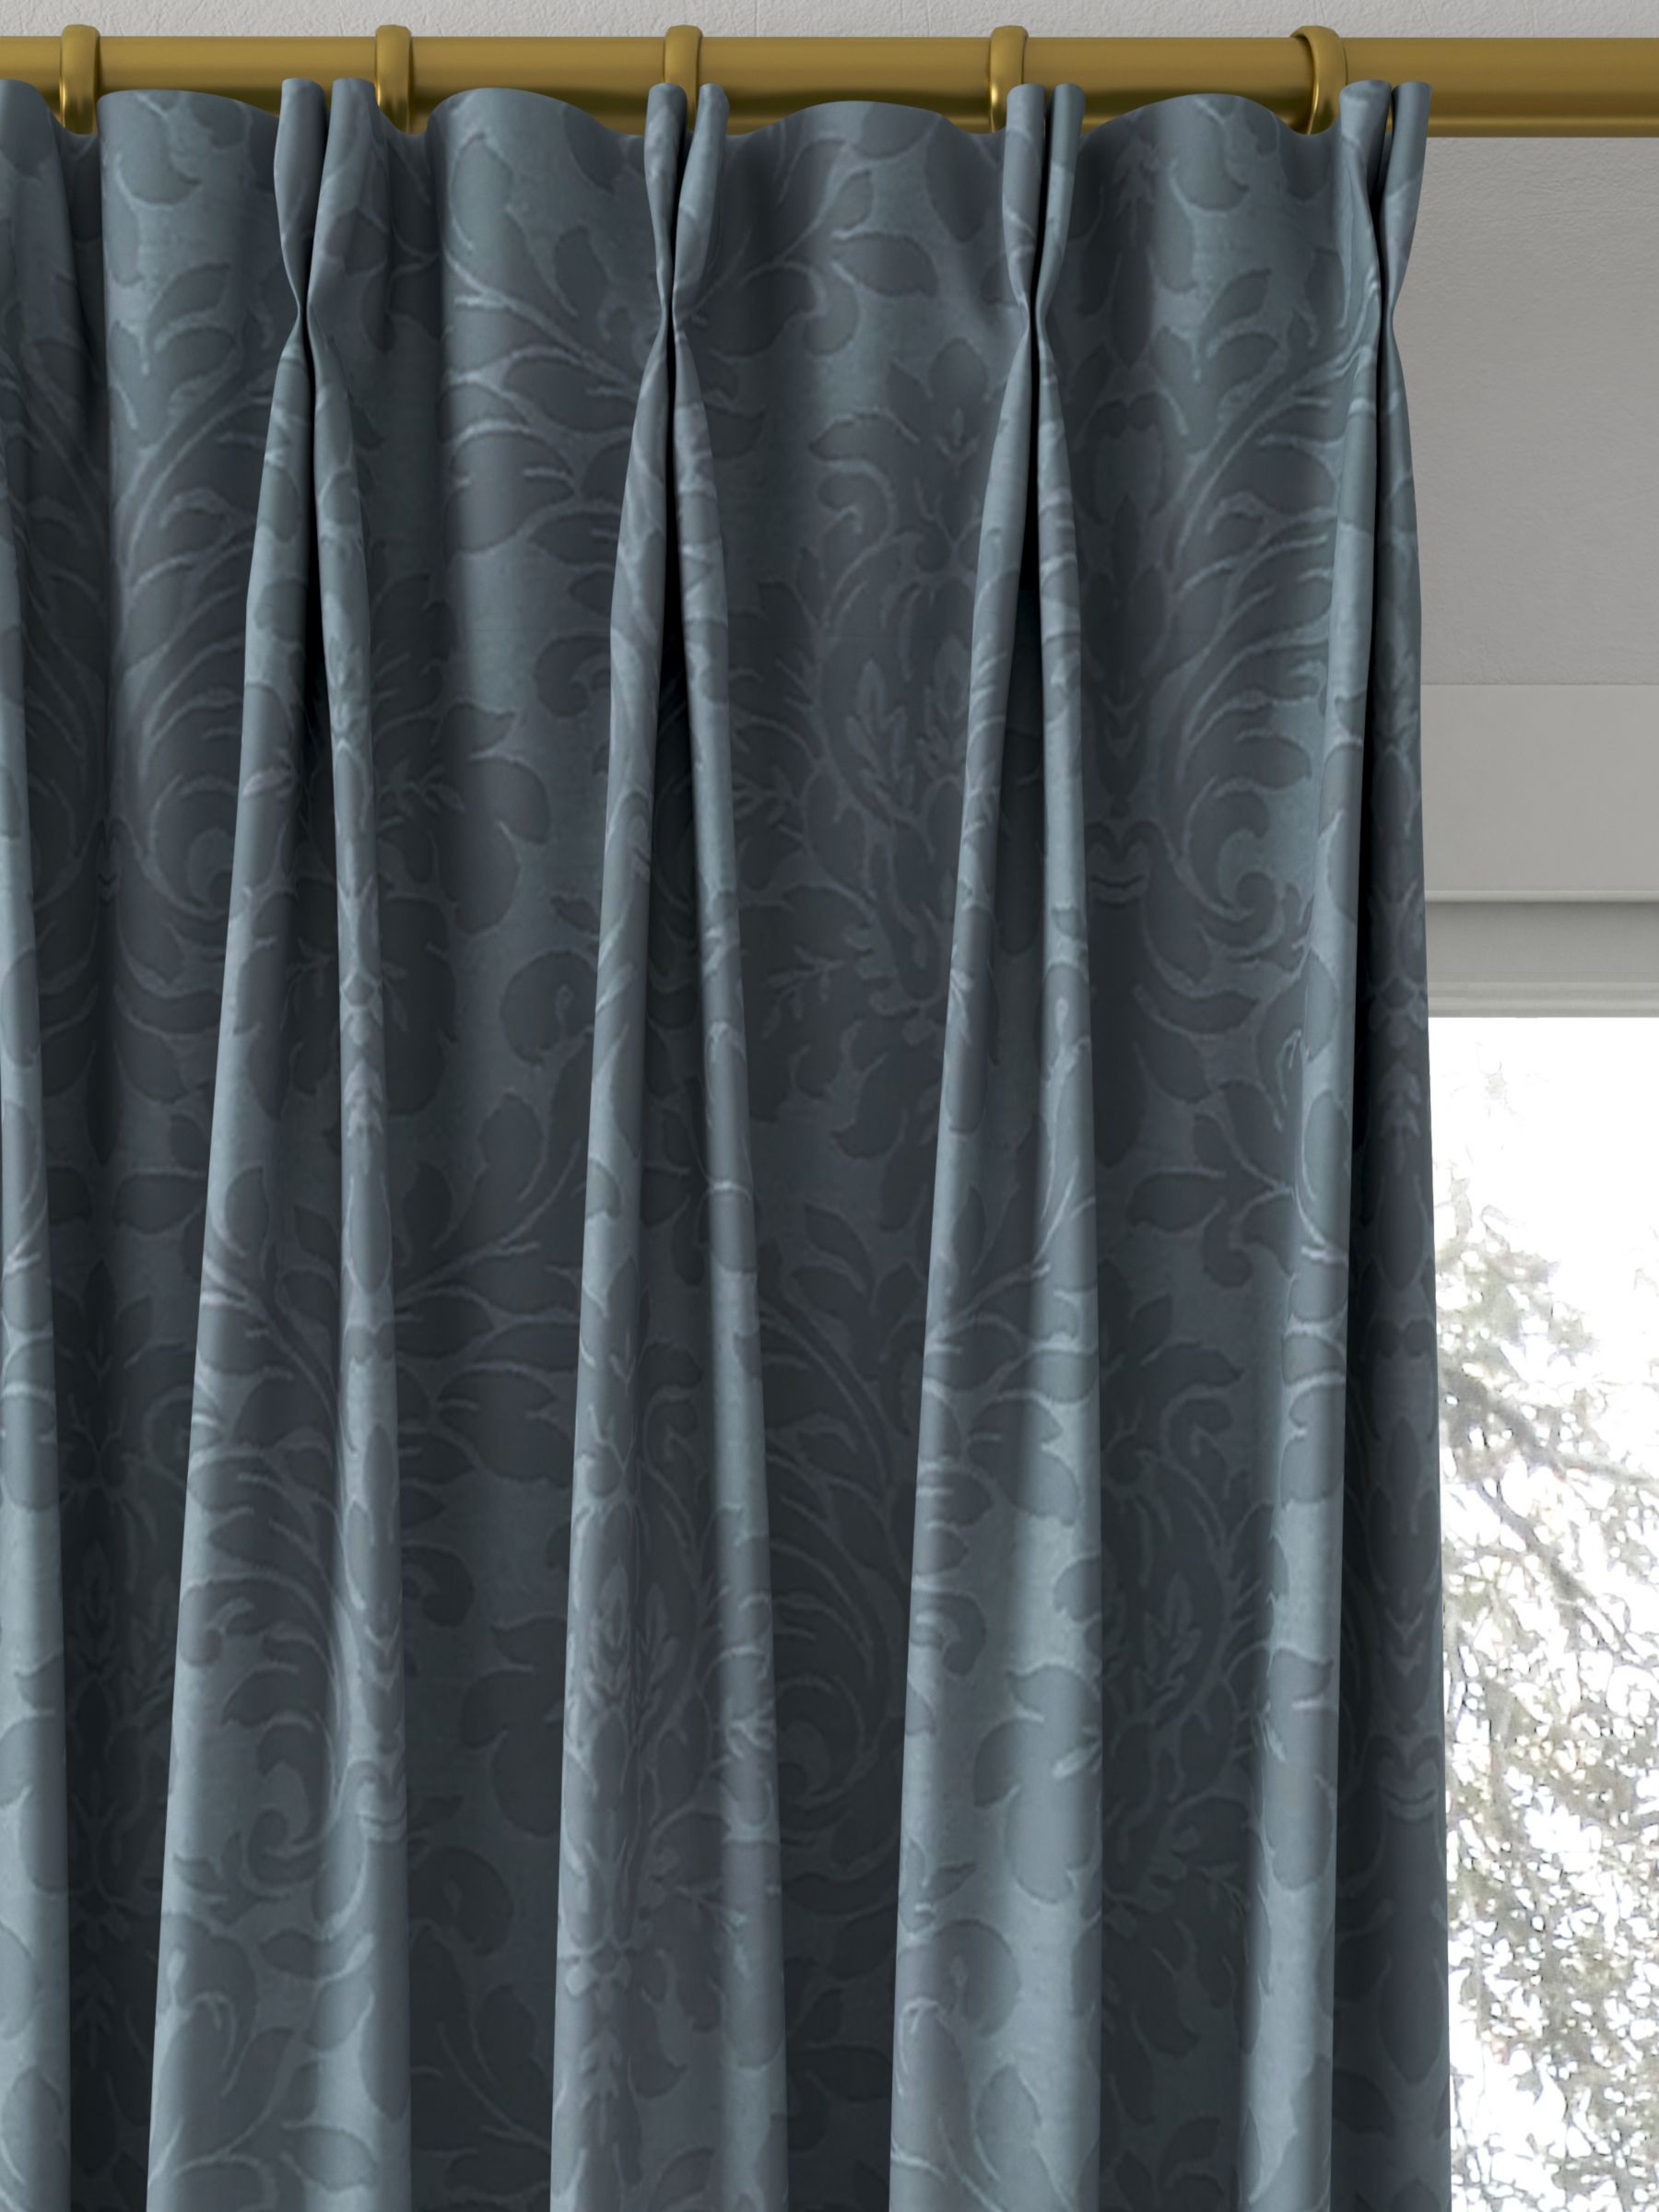 Sanderson Lymington Damask Made to Measure Curtains, Wedgwood